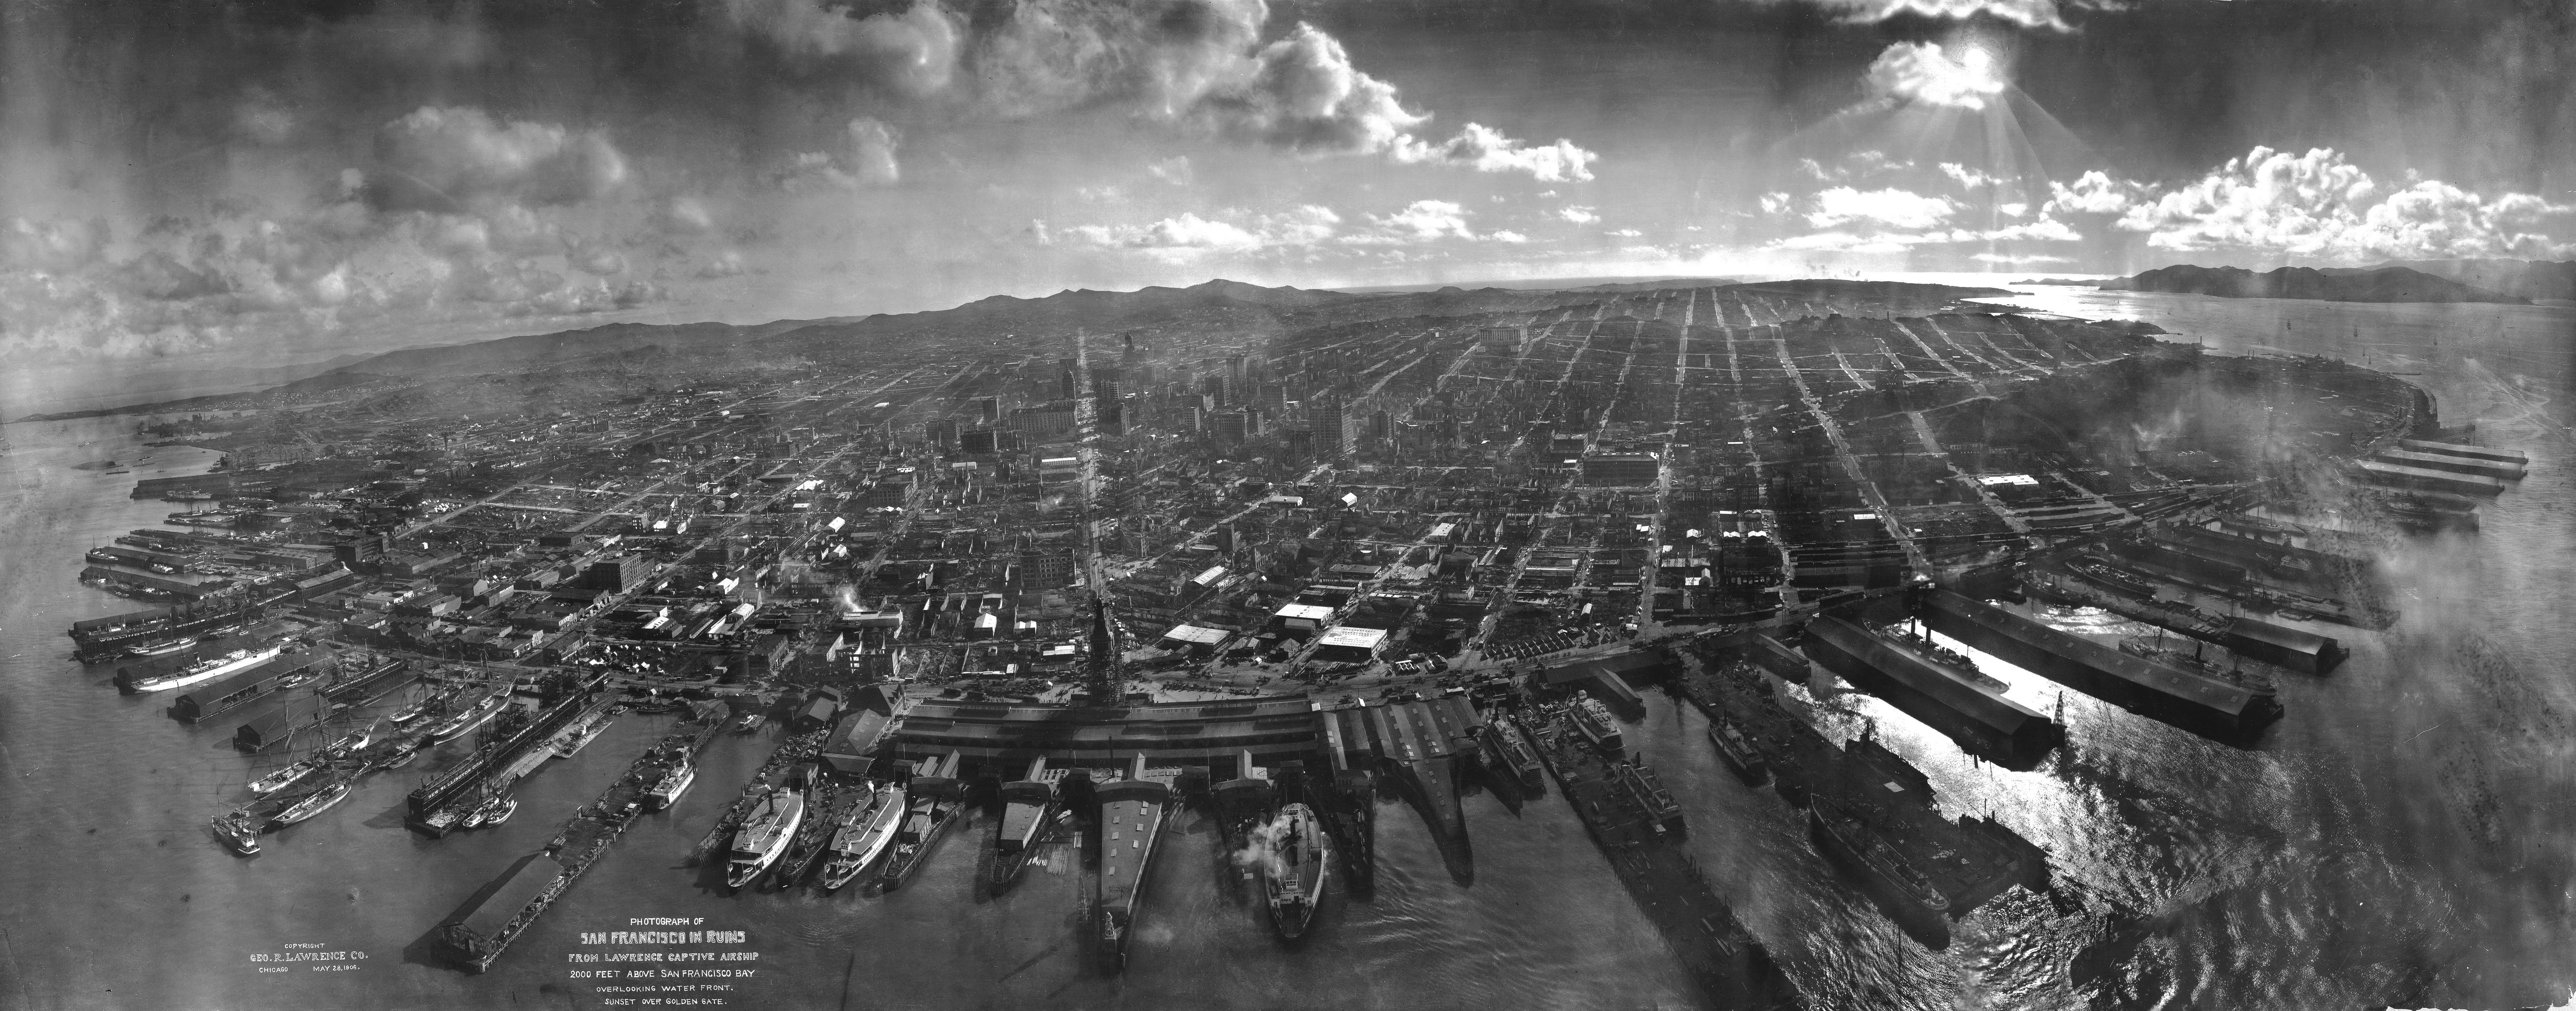 San Francisco, Waterfront, Earthquakes, 1906 earthquake, Aerial view, Ruin Wallpaper